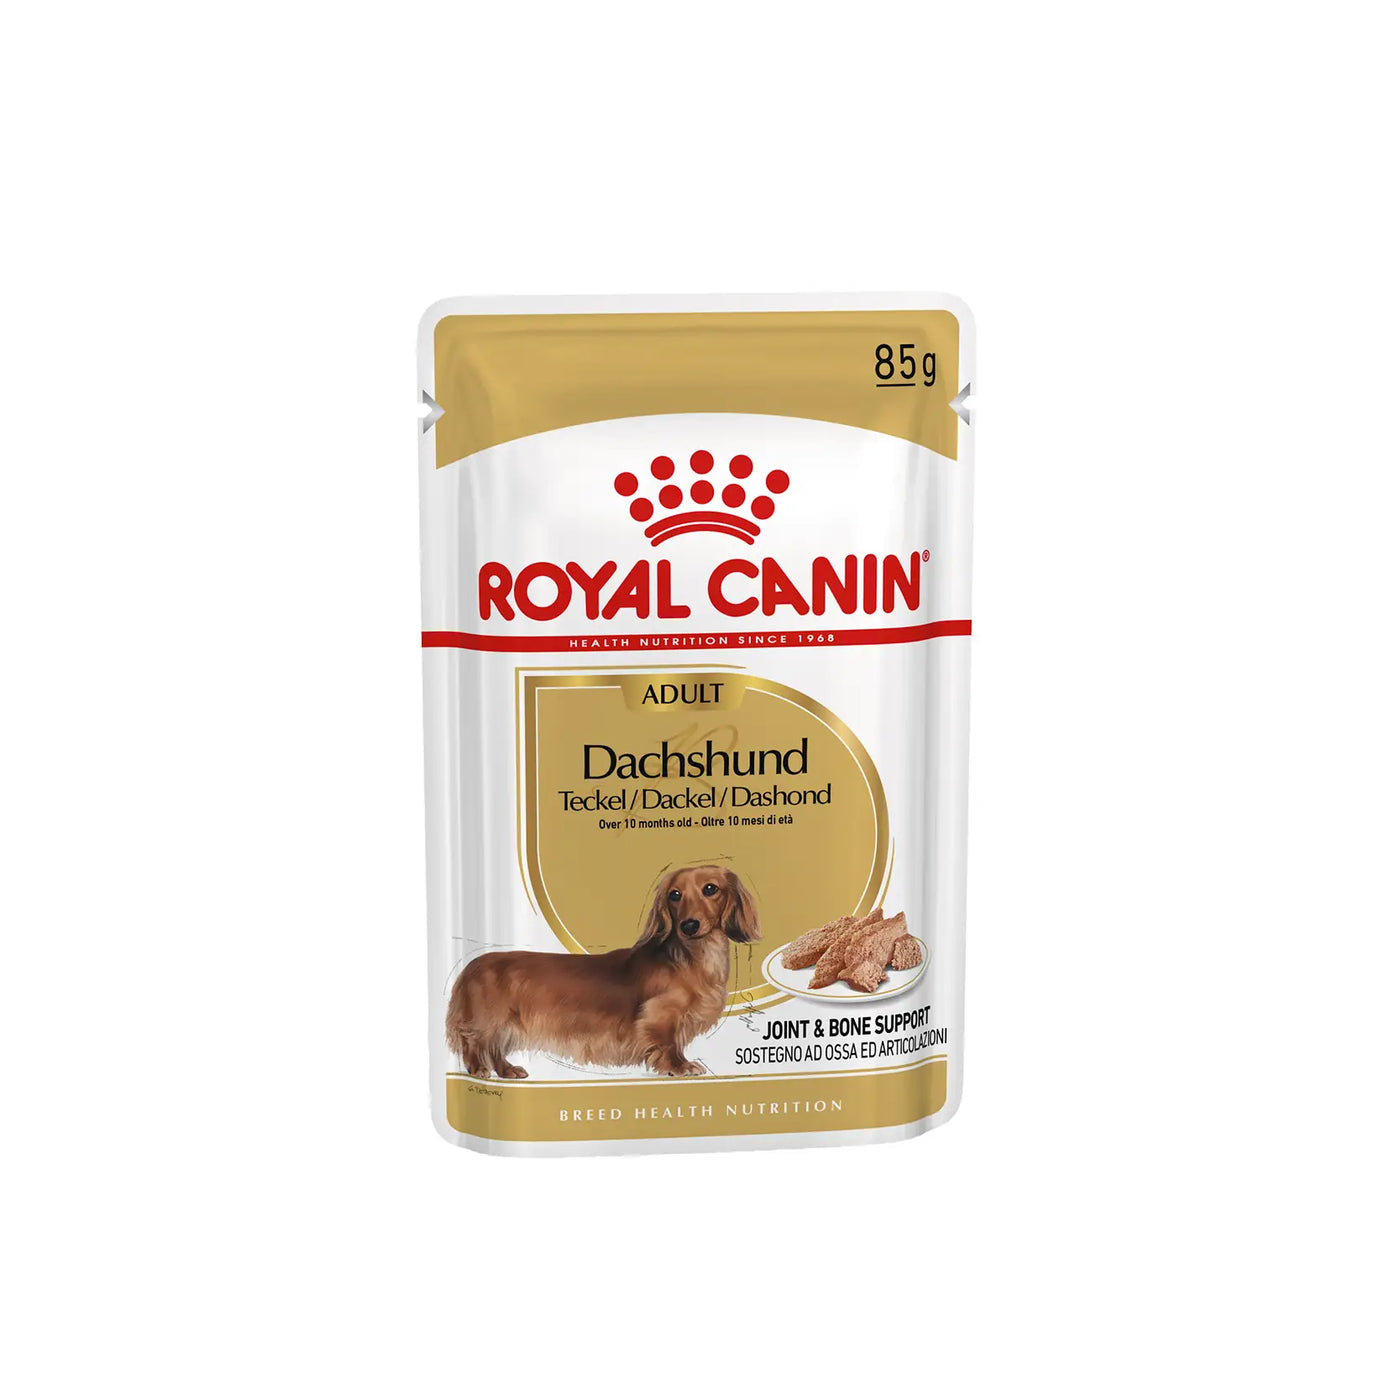 Royal Canin - Adult Dachshund Loaf Wet Food 85g